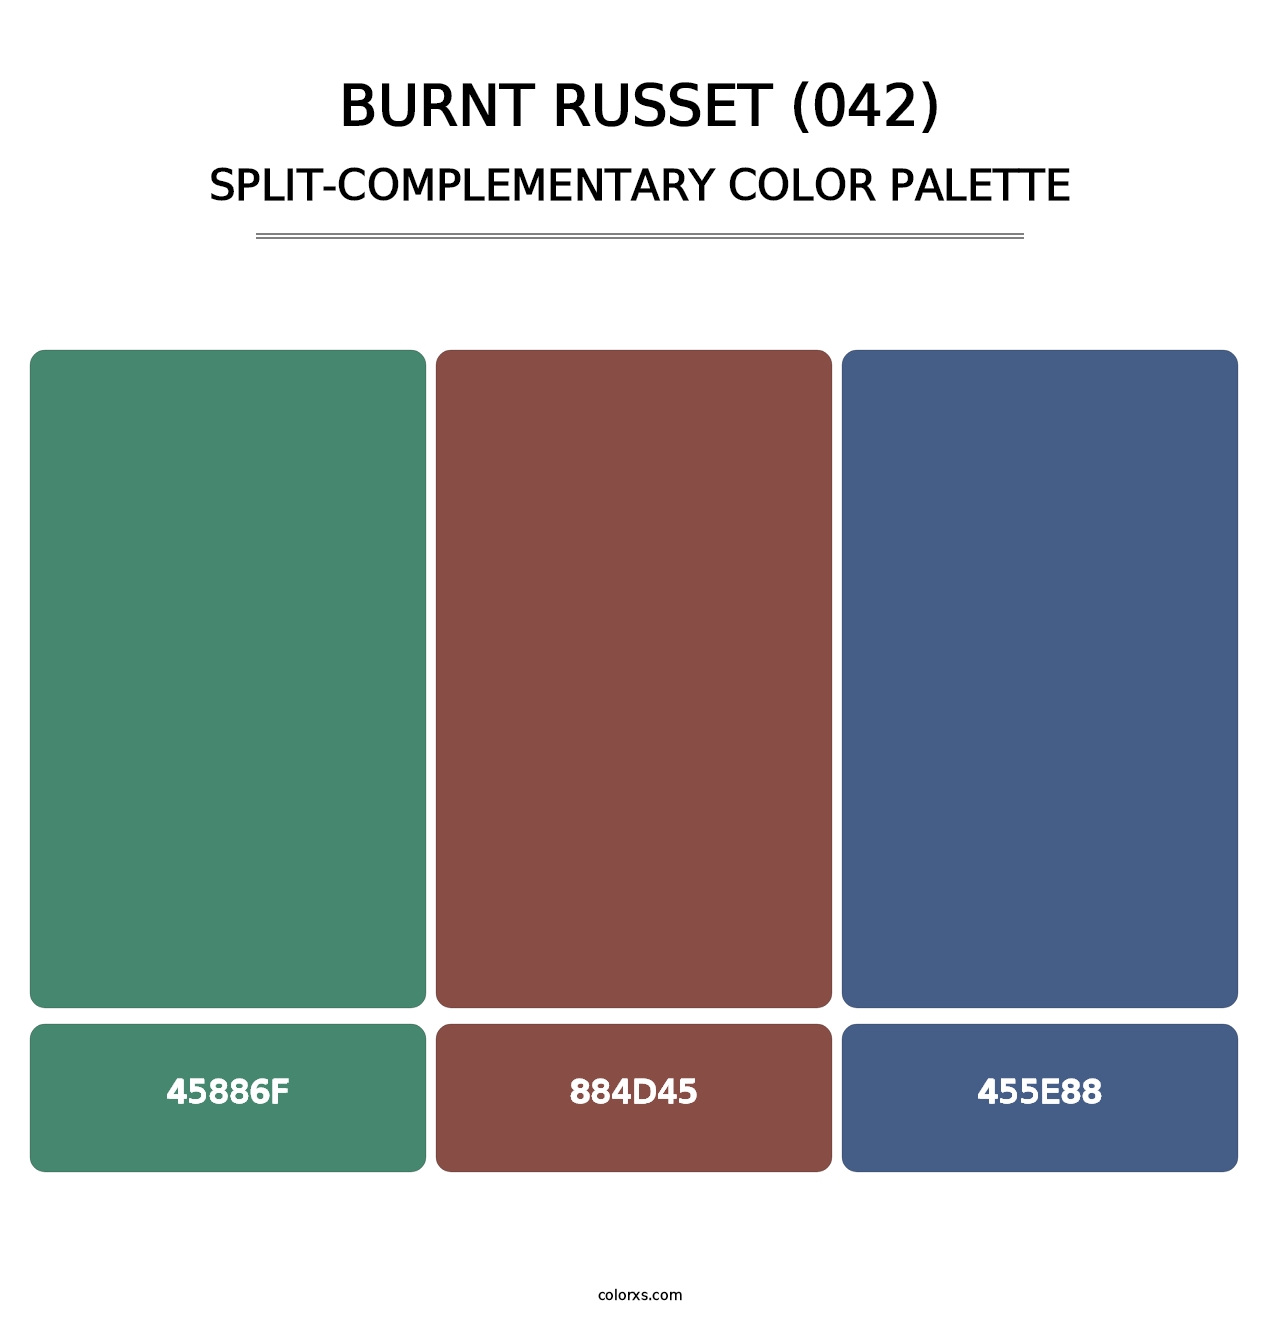 Burnt Russet (042) - Split-Complementary Color Palette